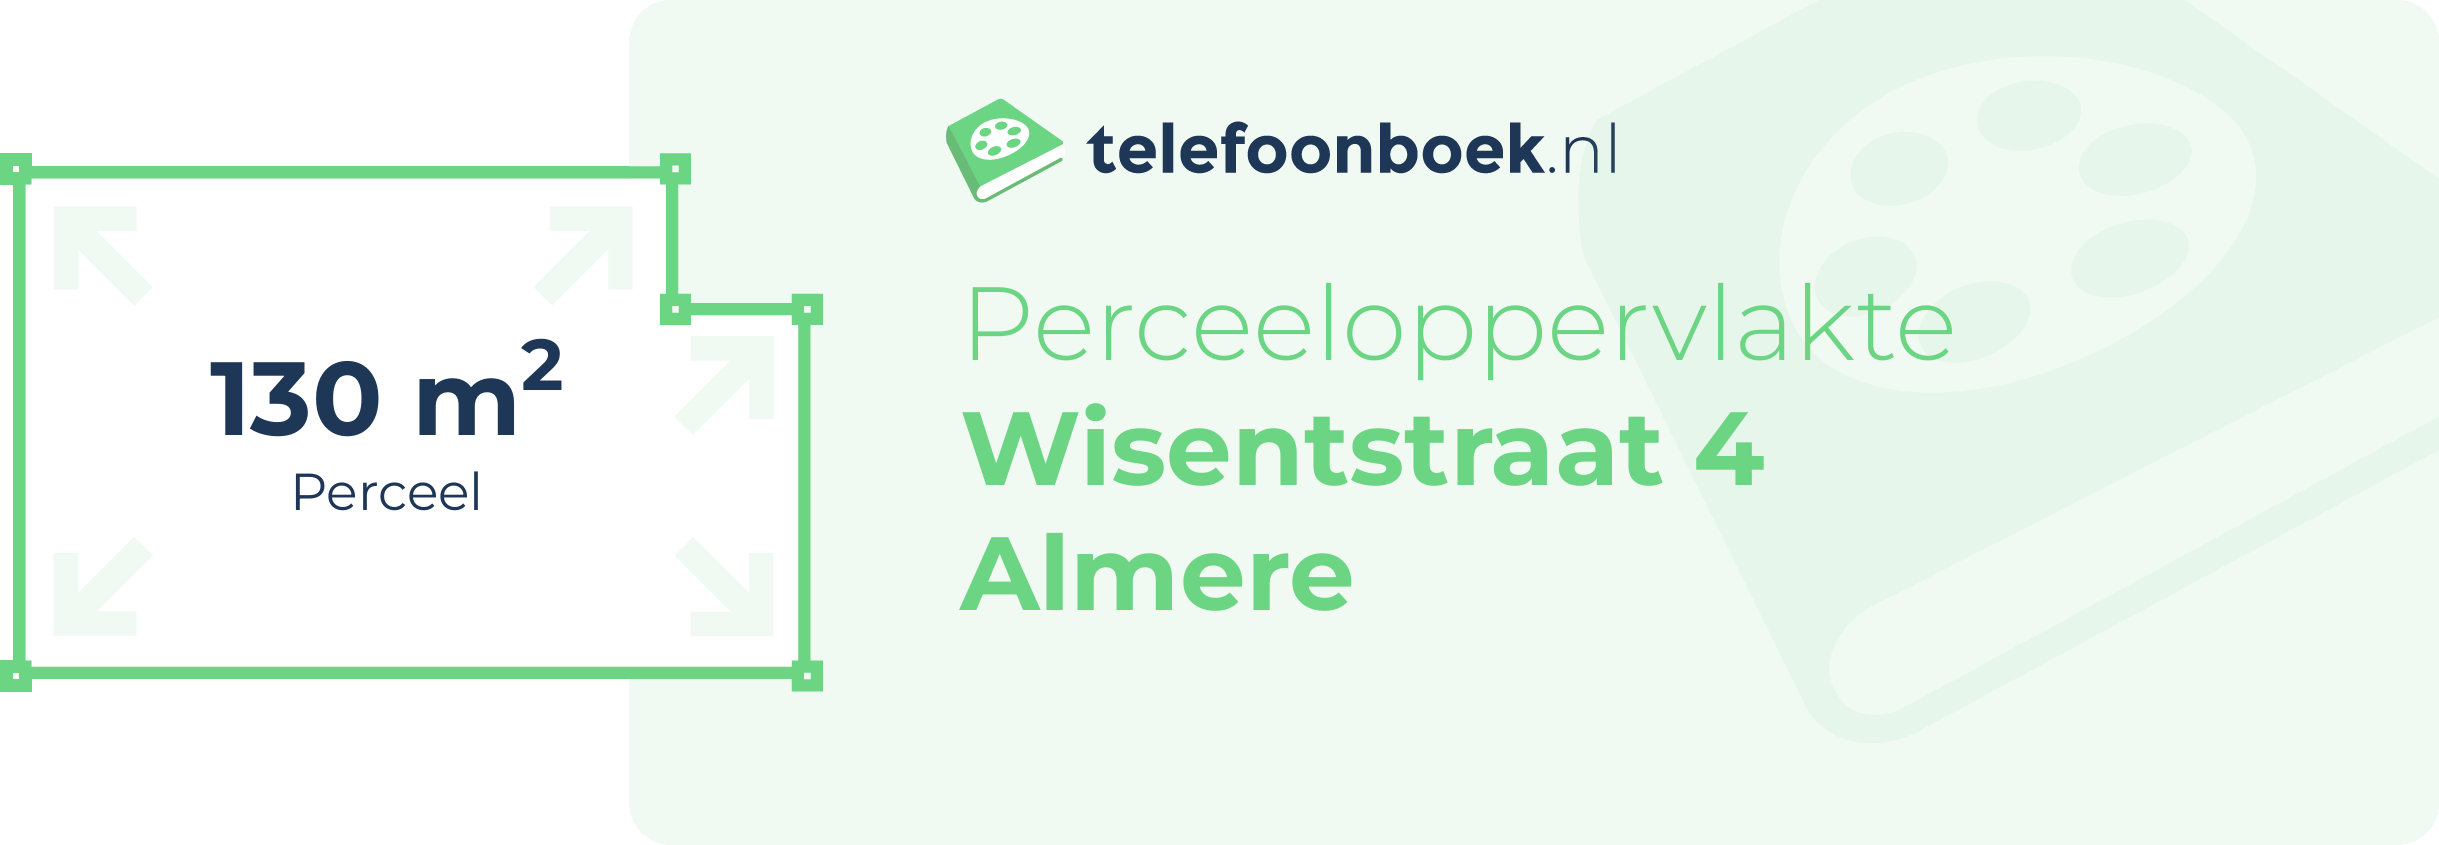 Perceeloppervlakte Wisentstraat 4 Almere